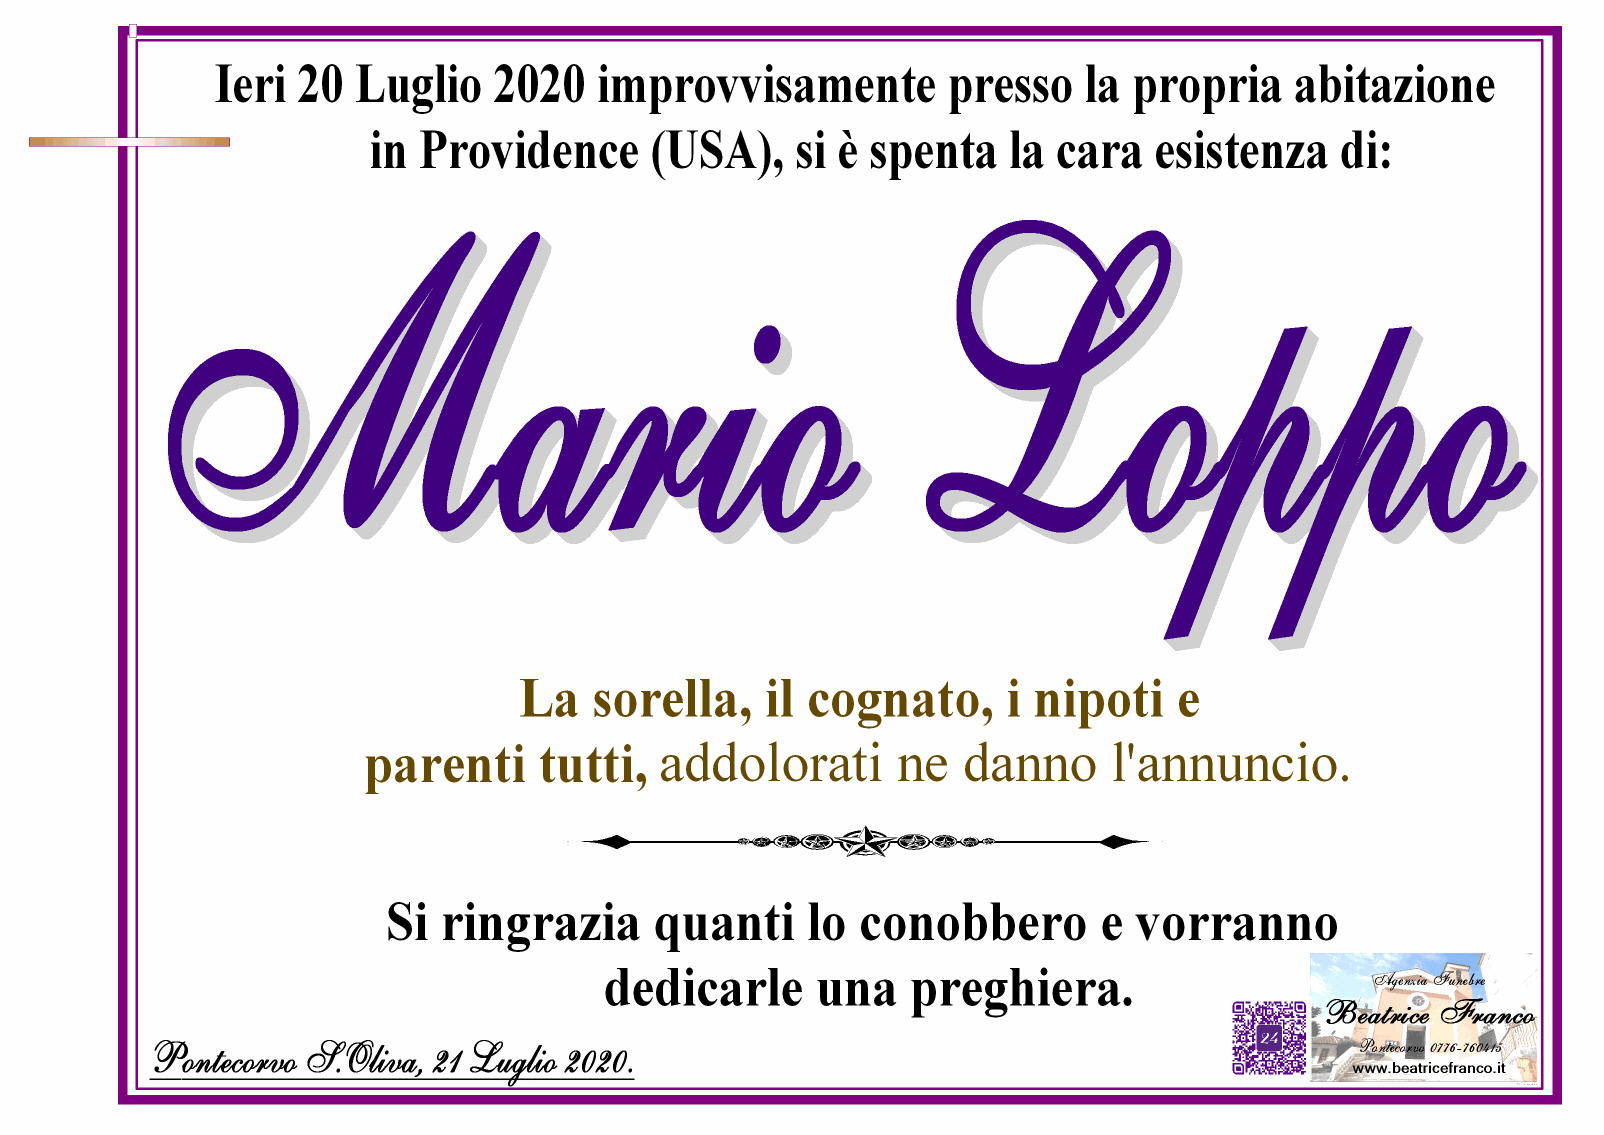 Mario Loppo